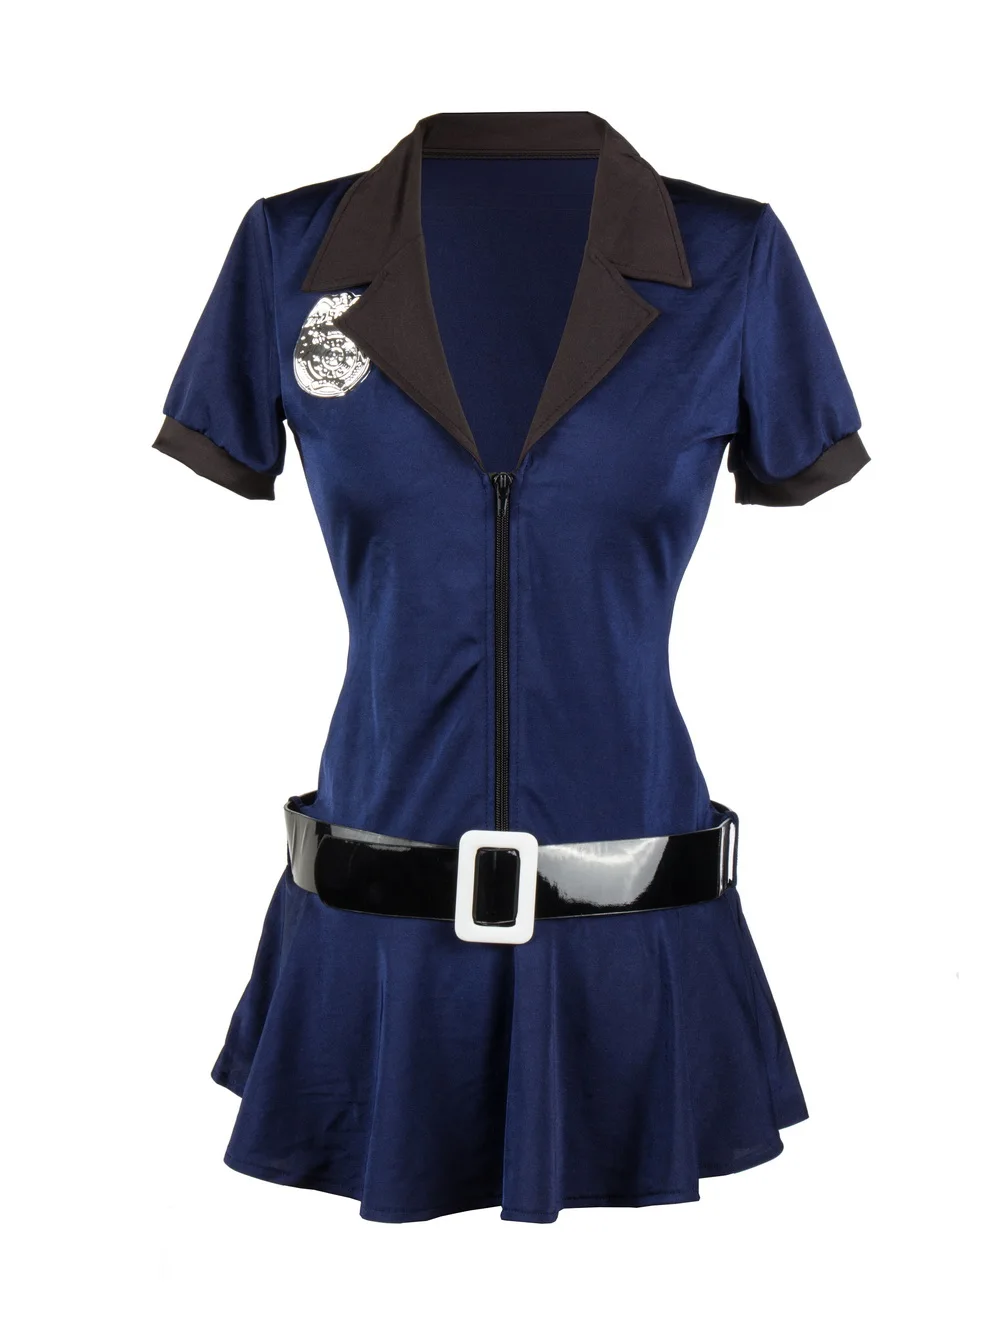 Blå Sexet Kostume Halloween Cosplay Kjole Outfit politibetjent Uniform Plus Size Kostumer Til Voksne Kvinder 2XL rabat | Kvinder's Kostumer \ Groendalspark.dk